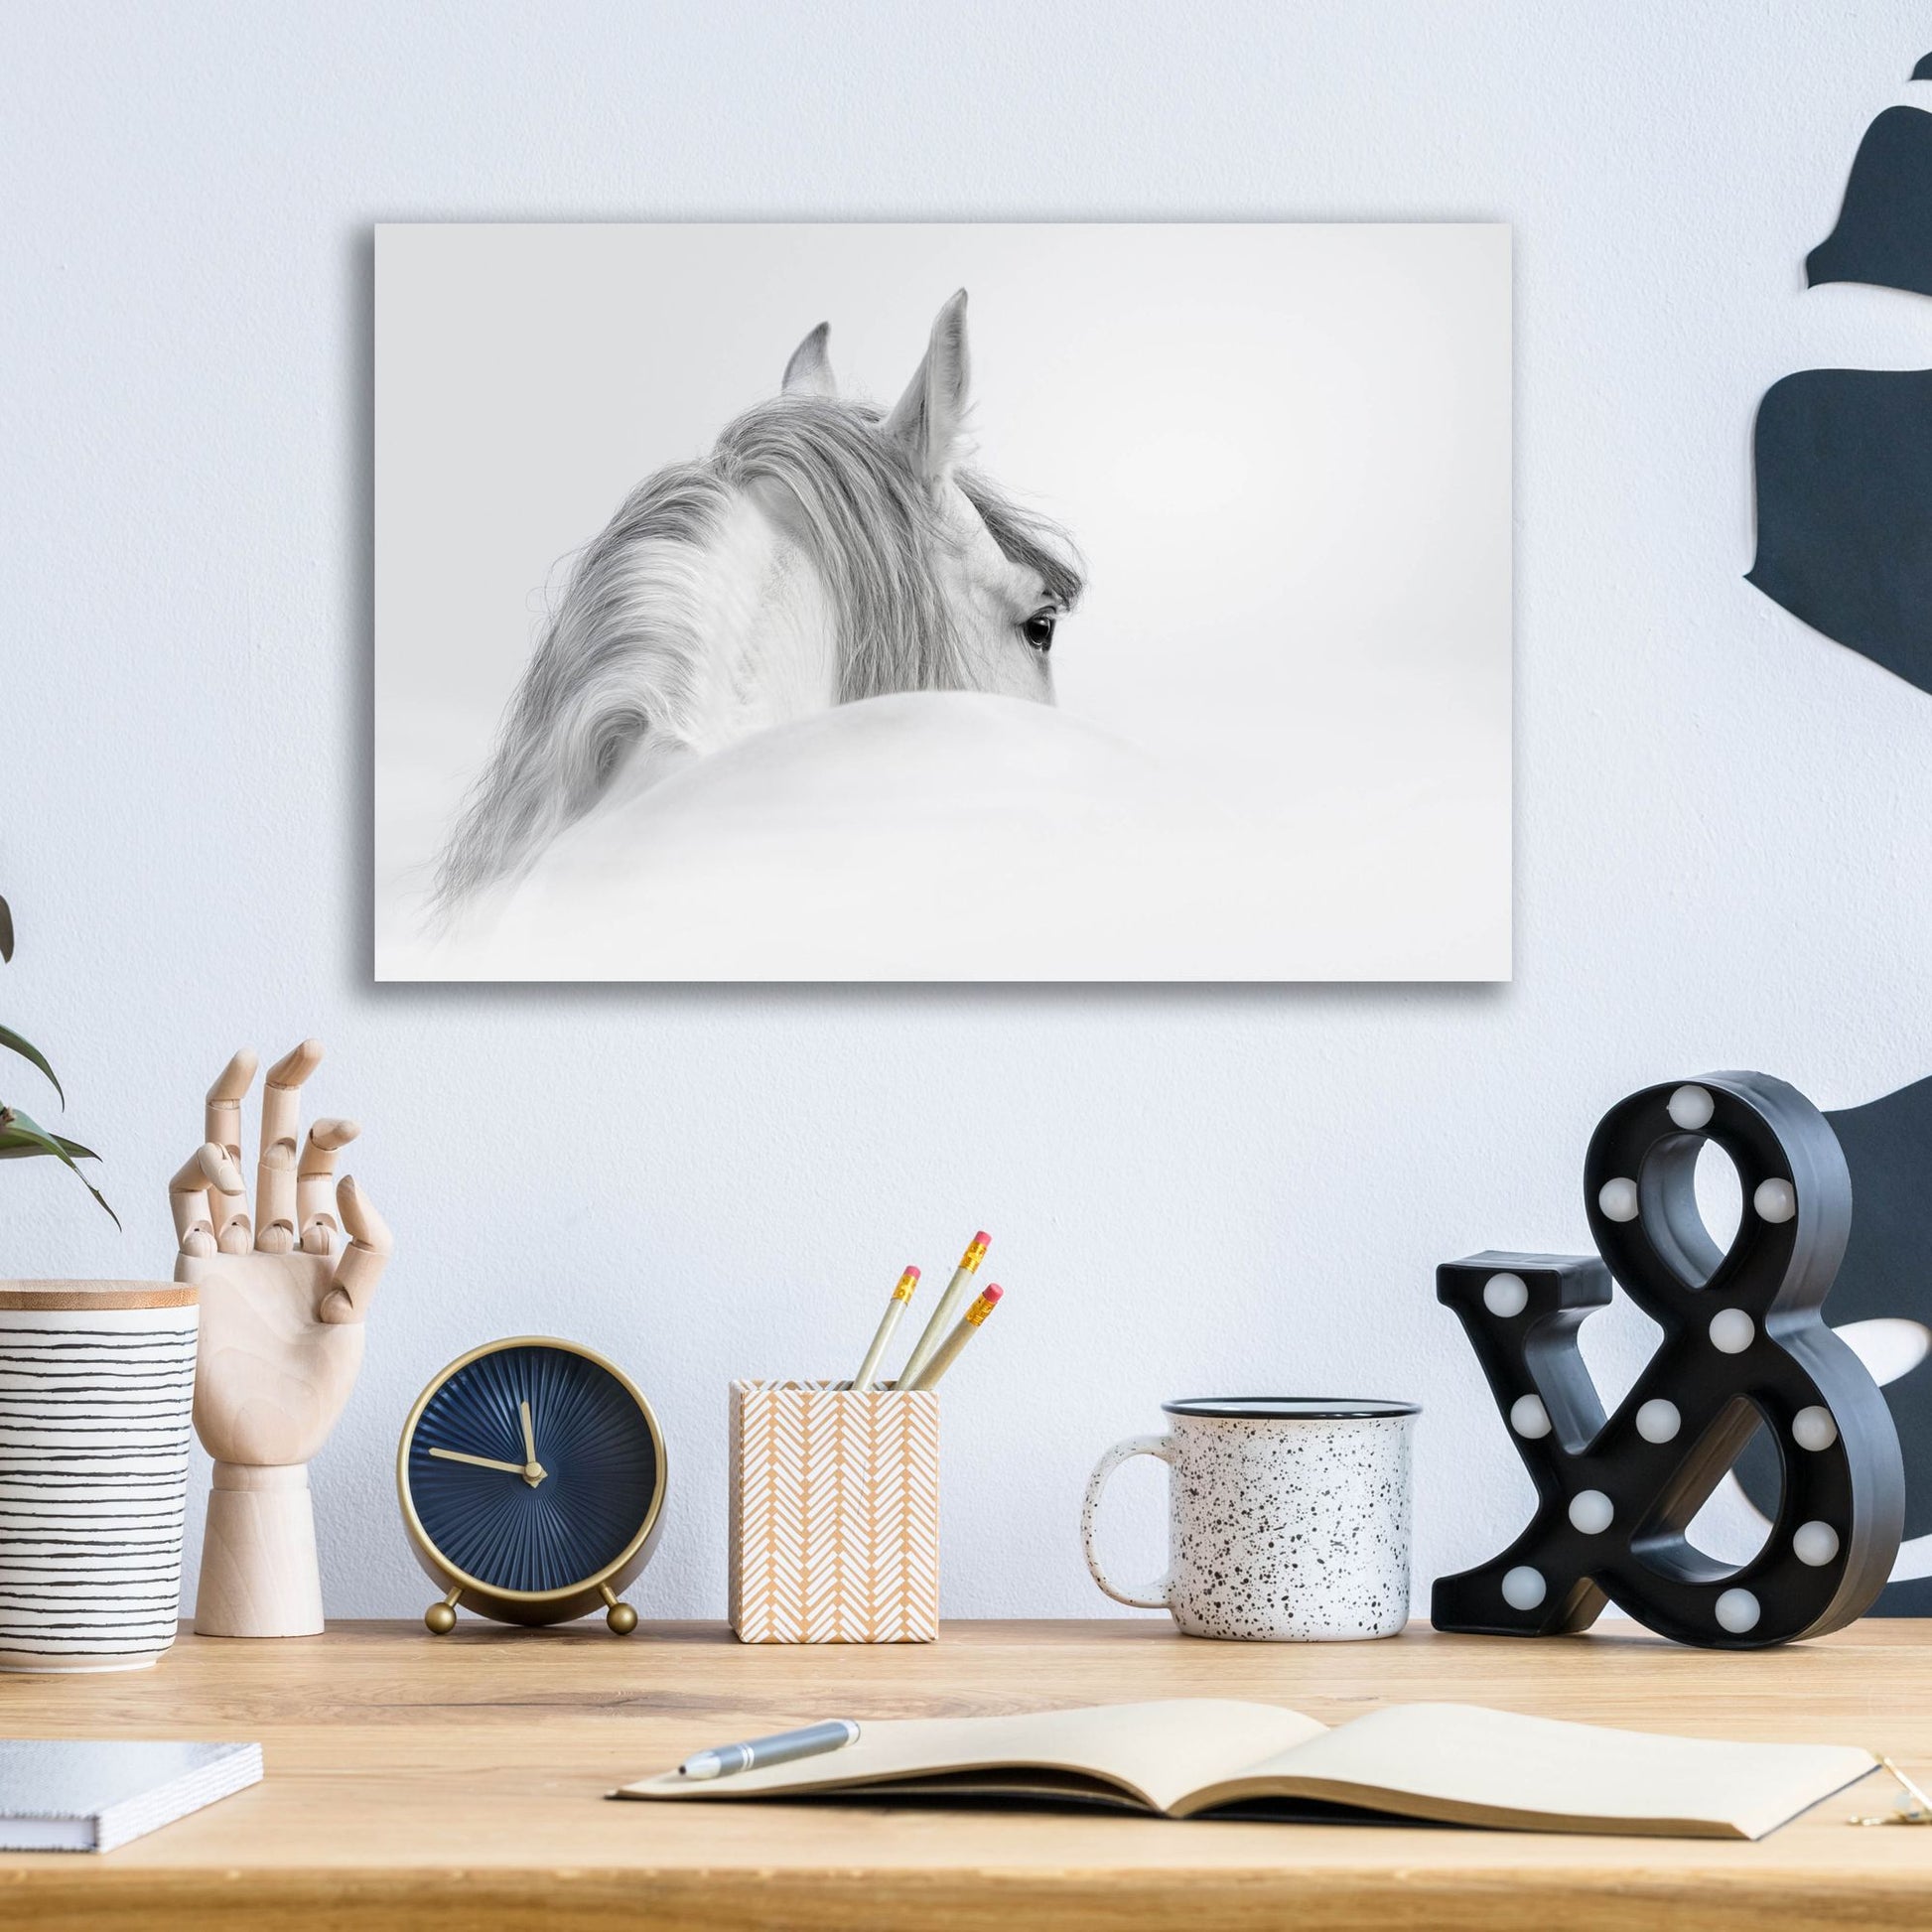 Epic Art 'White Horse' by Photoinc Studio, Acrylic Glass Wall Art,16x12